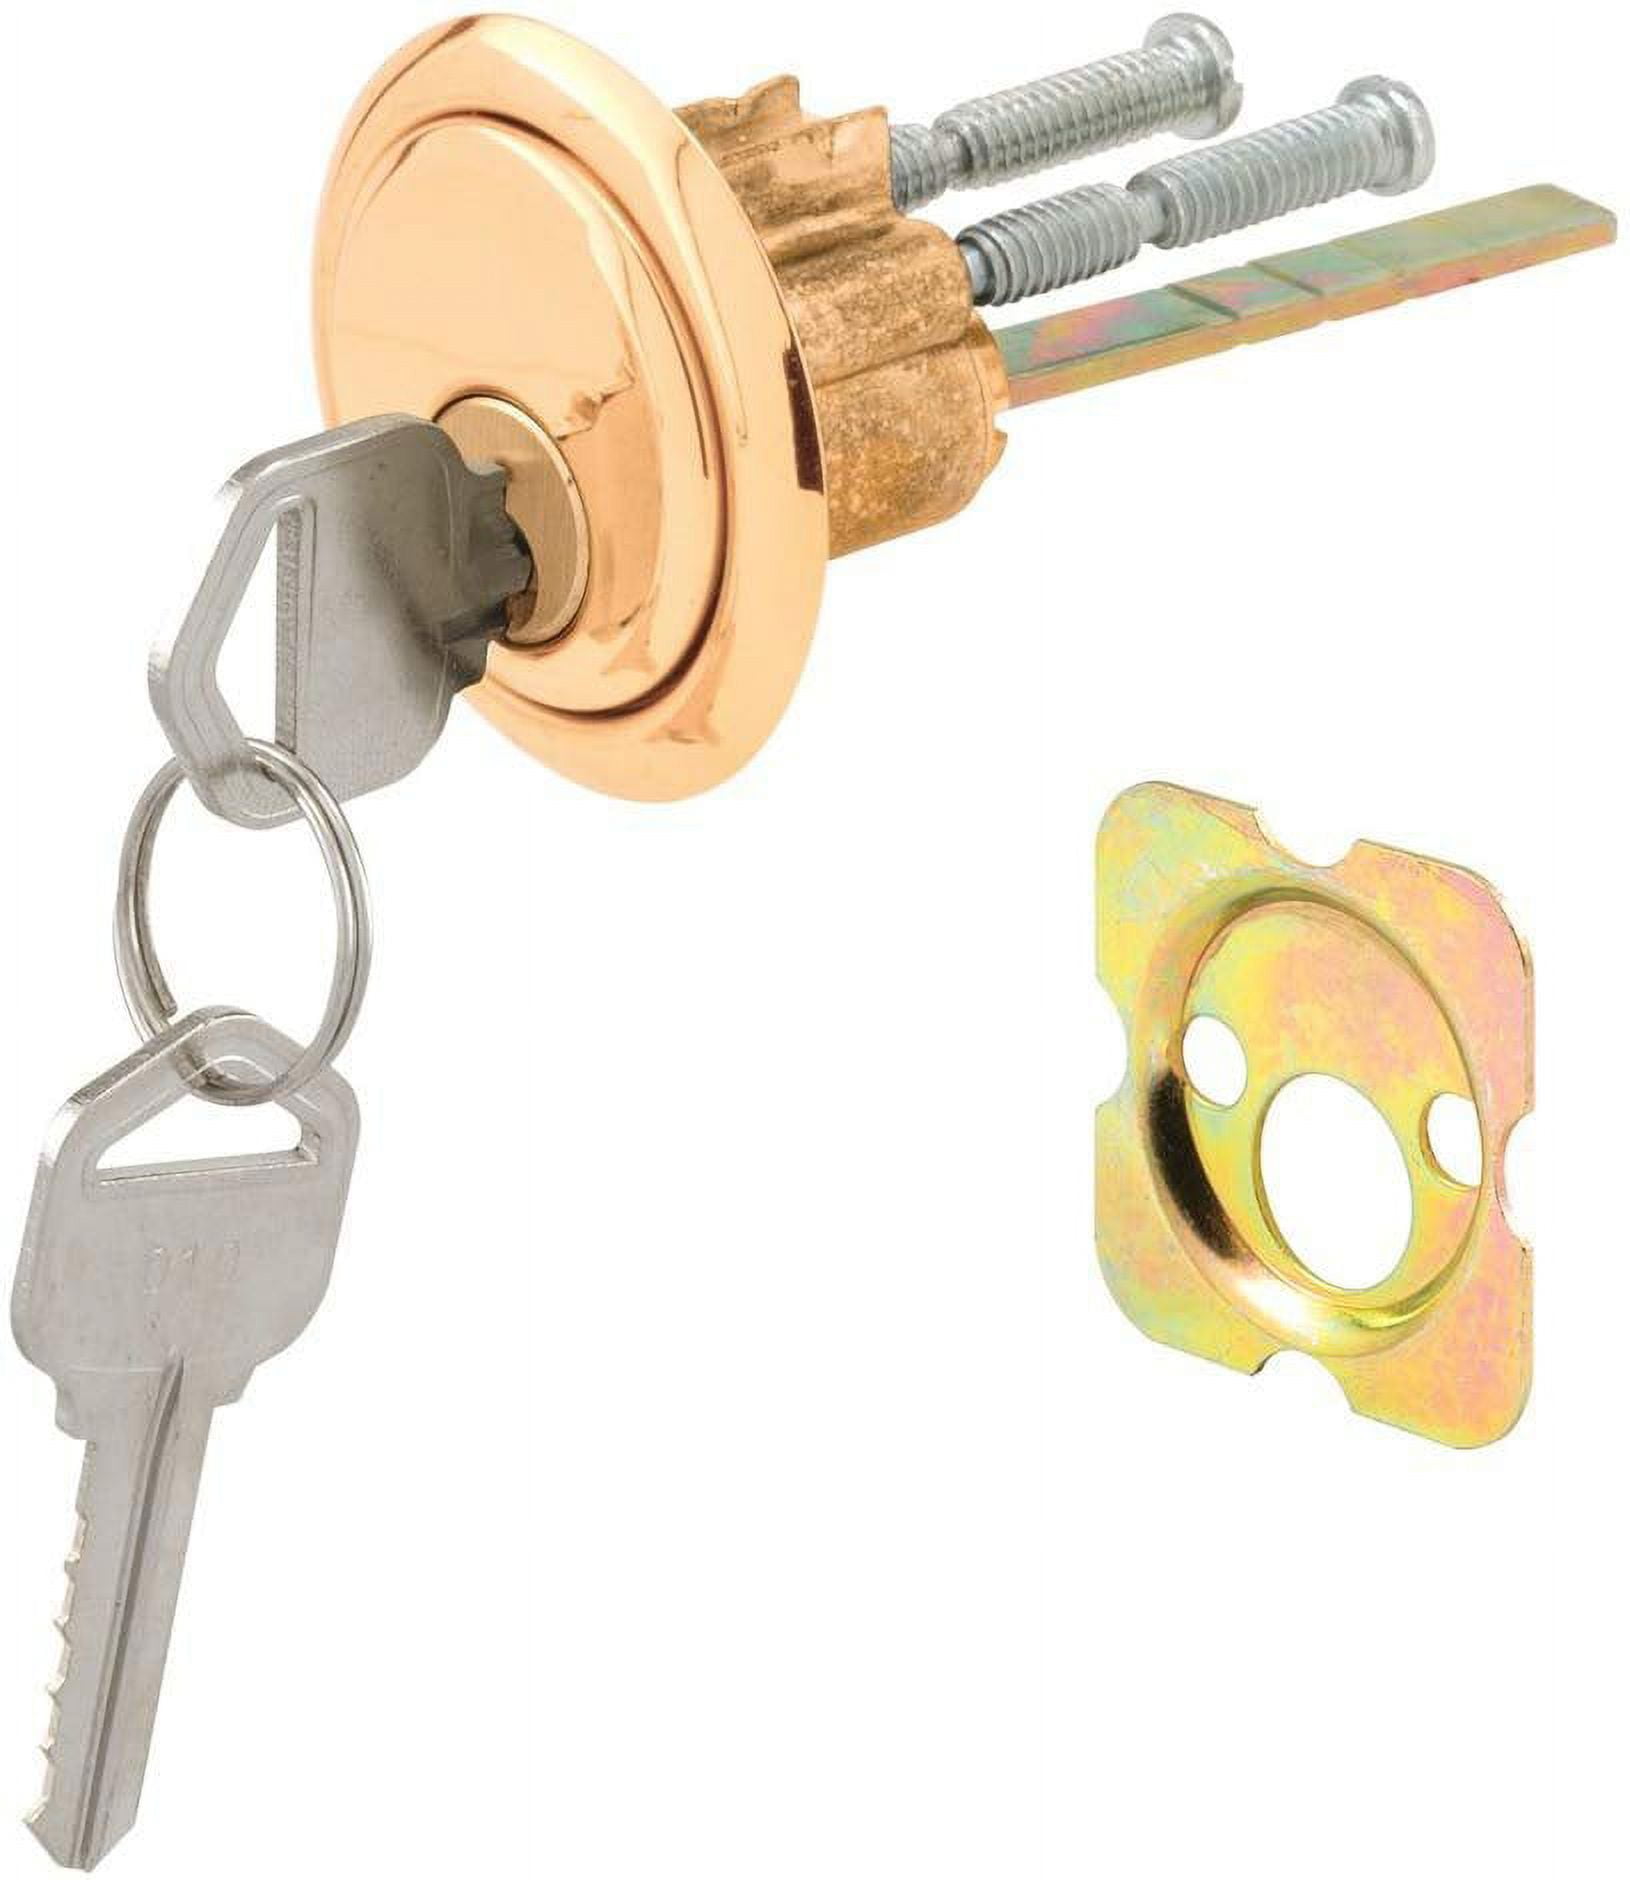 Defender Security U 9965 Rim Cylinder Lock Kwikset/Weiser with Brass Face and Diecast Housing